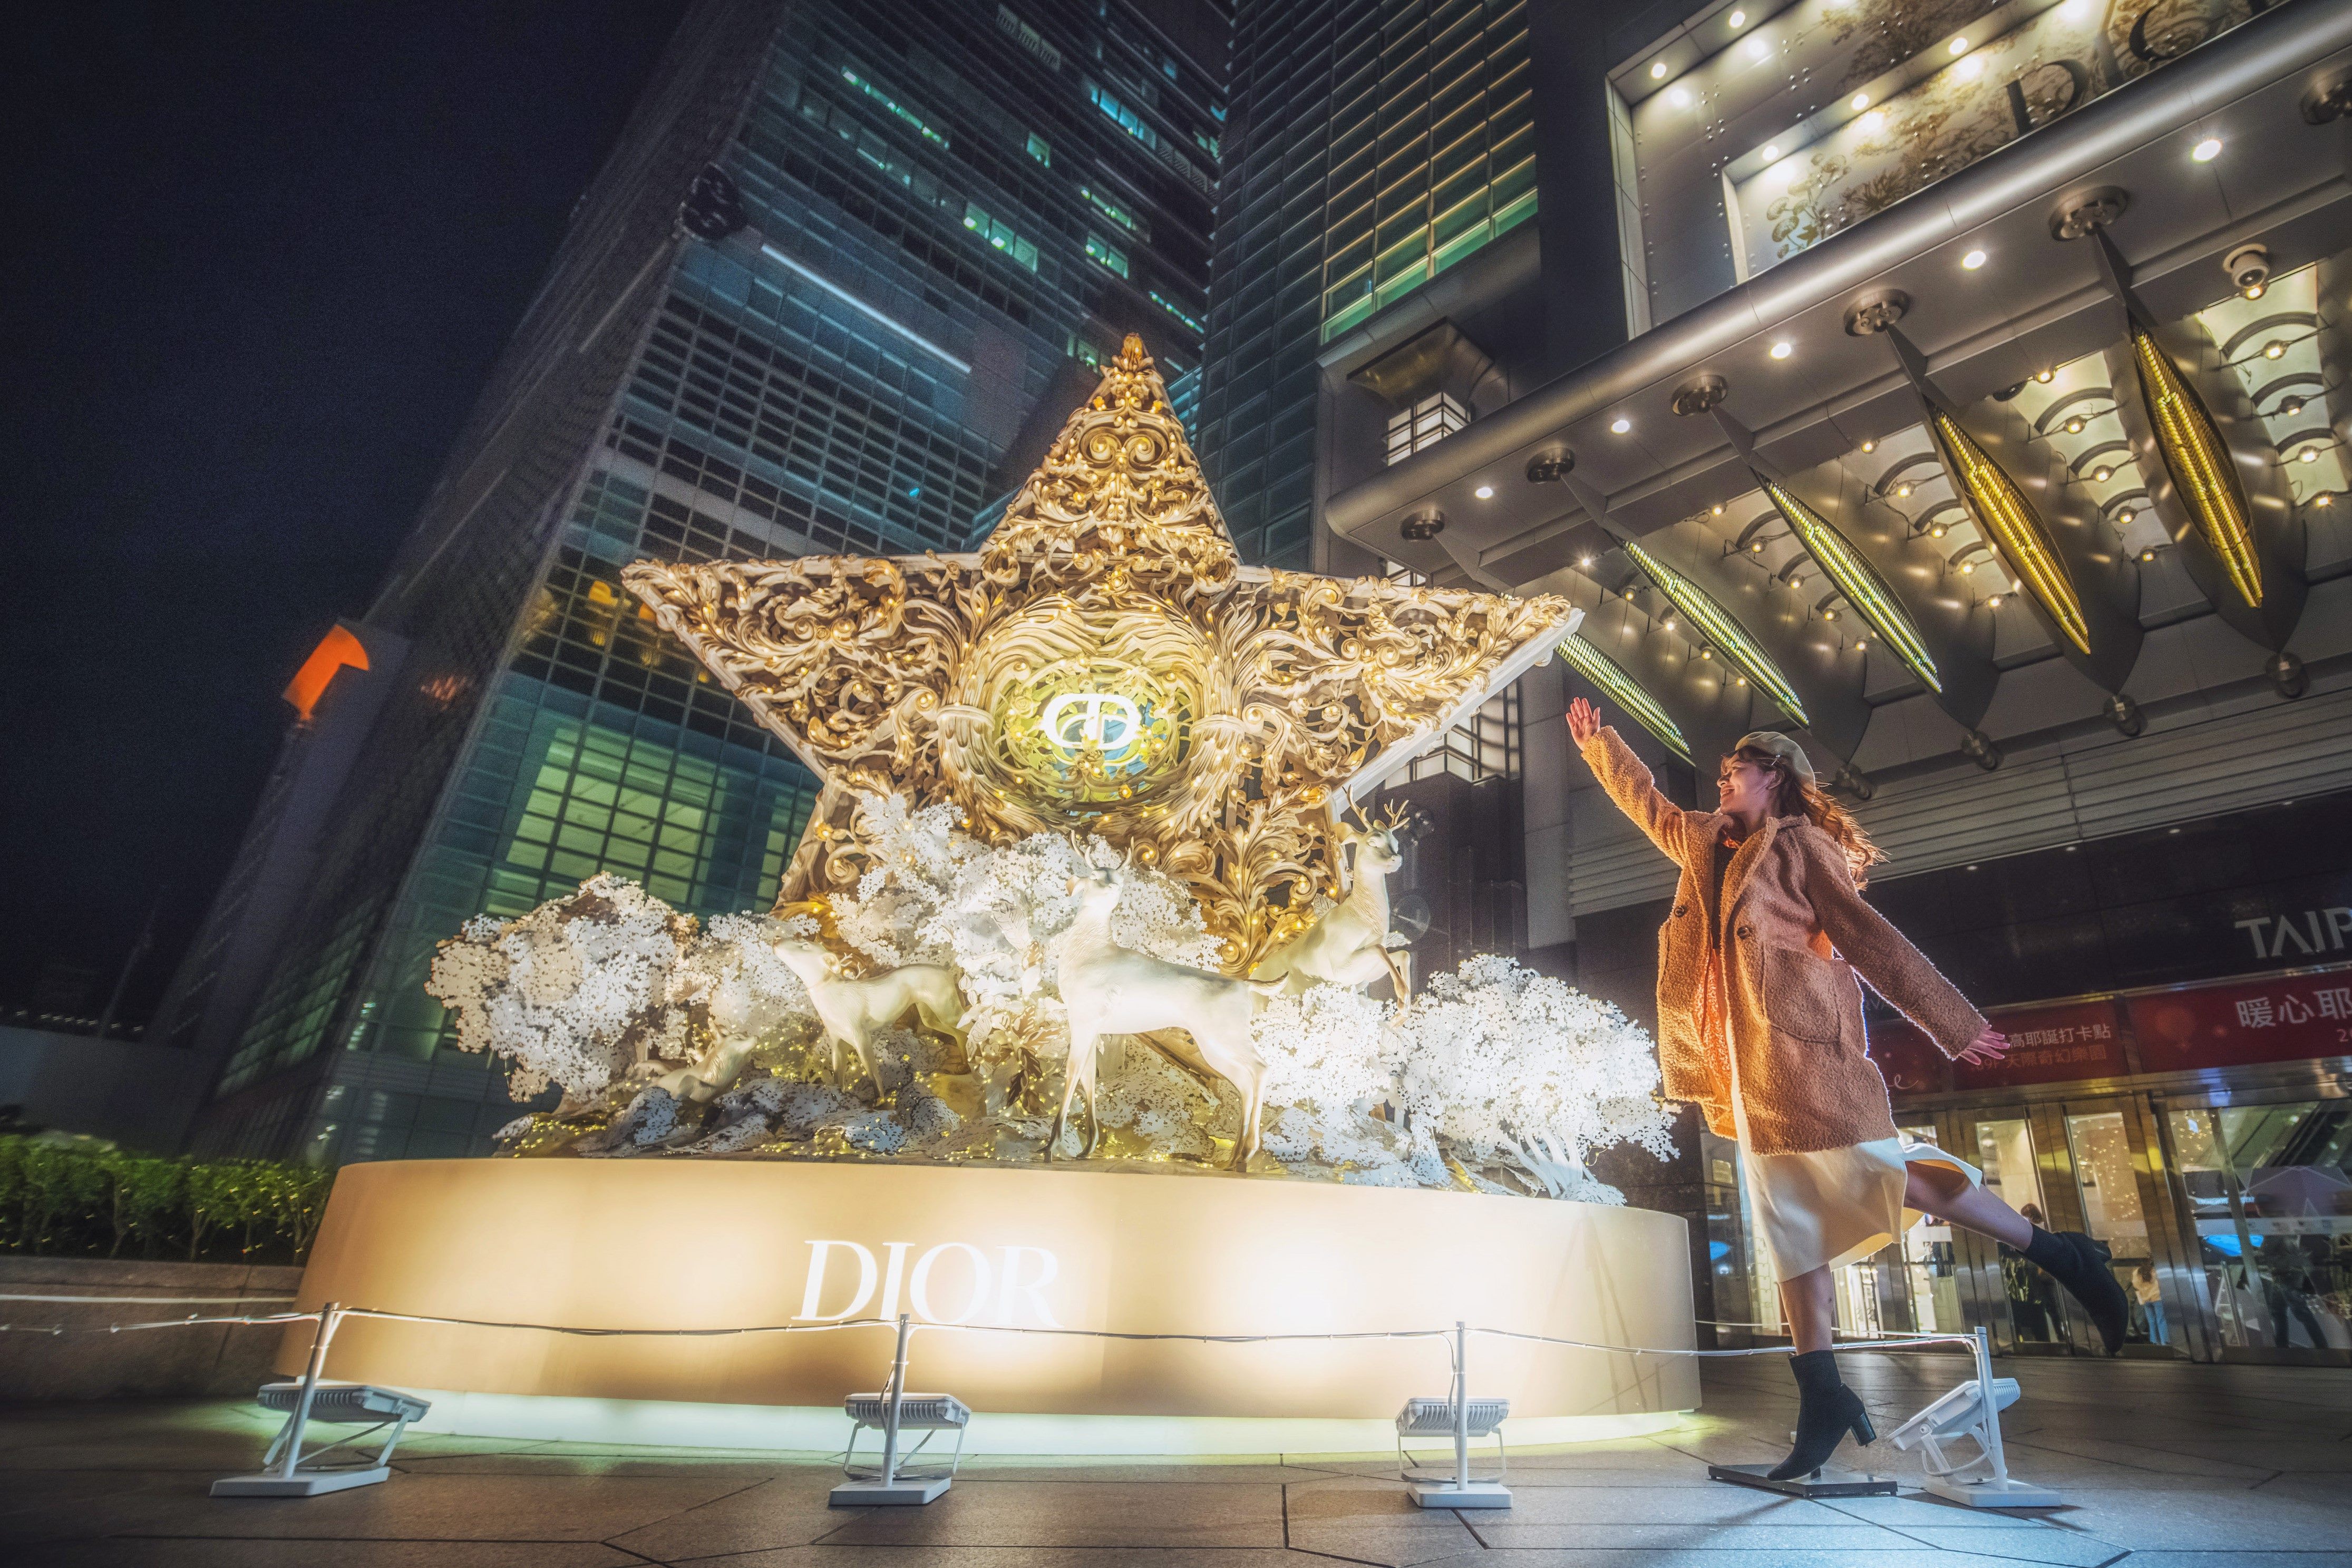 台北101 Dior 經典幸運星